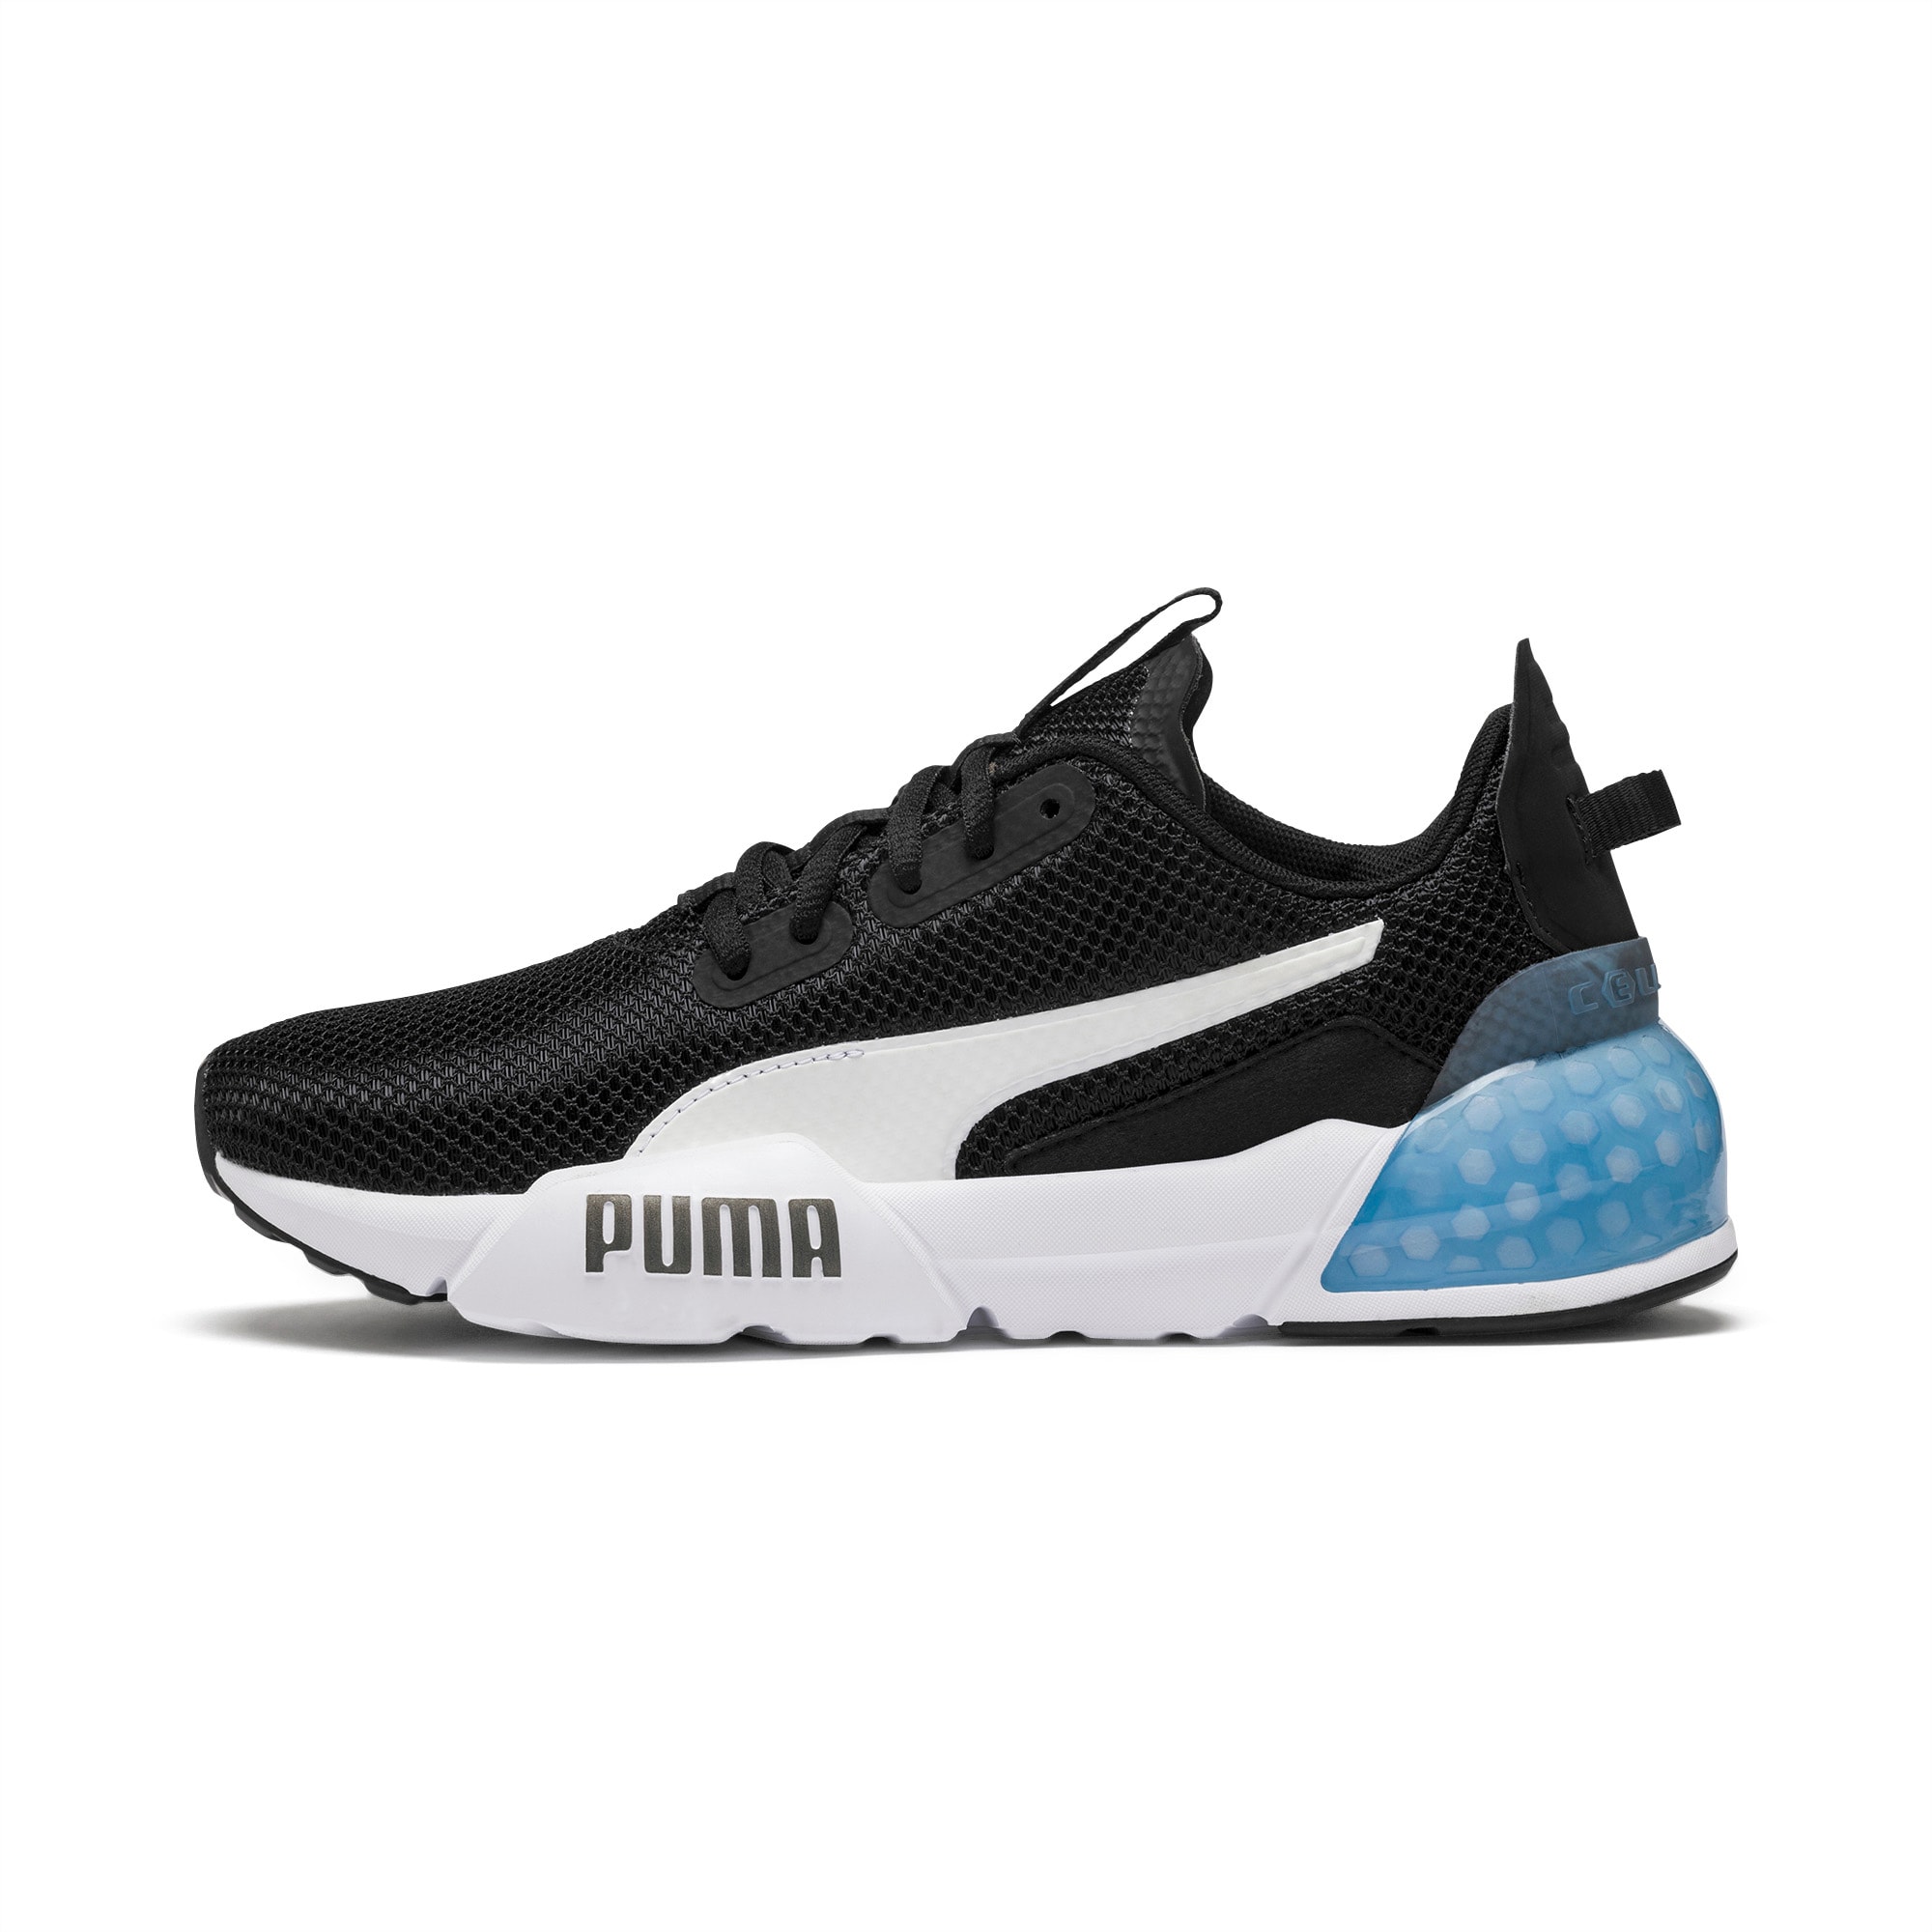 puma cell tennis shoes